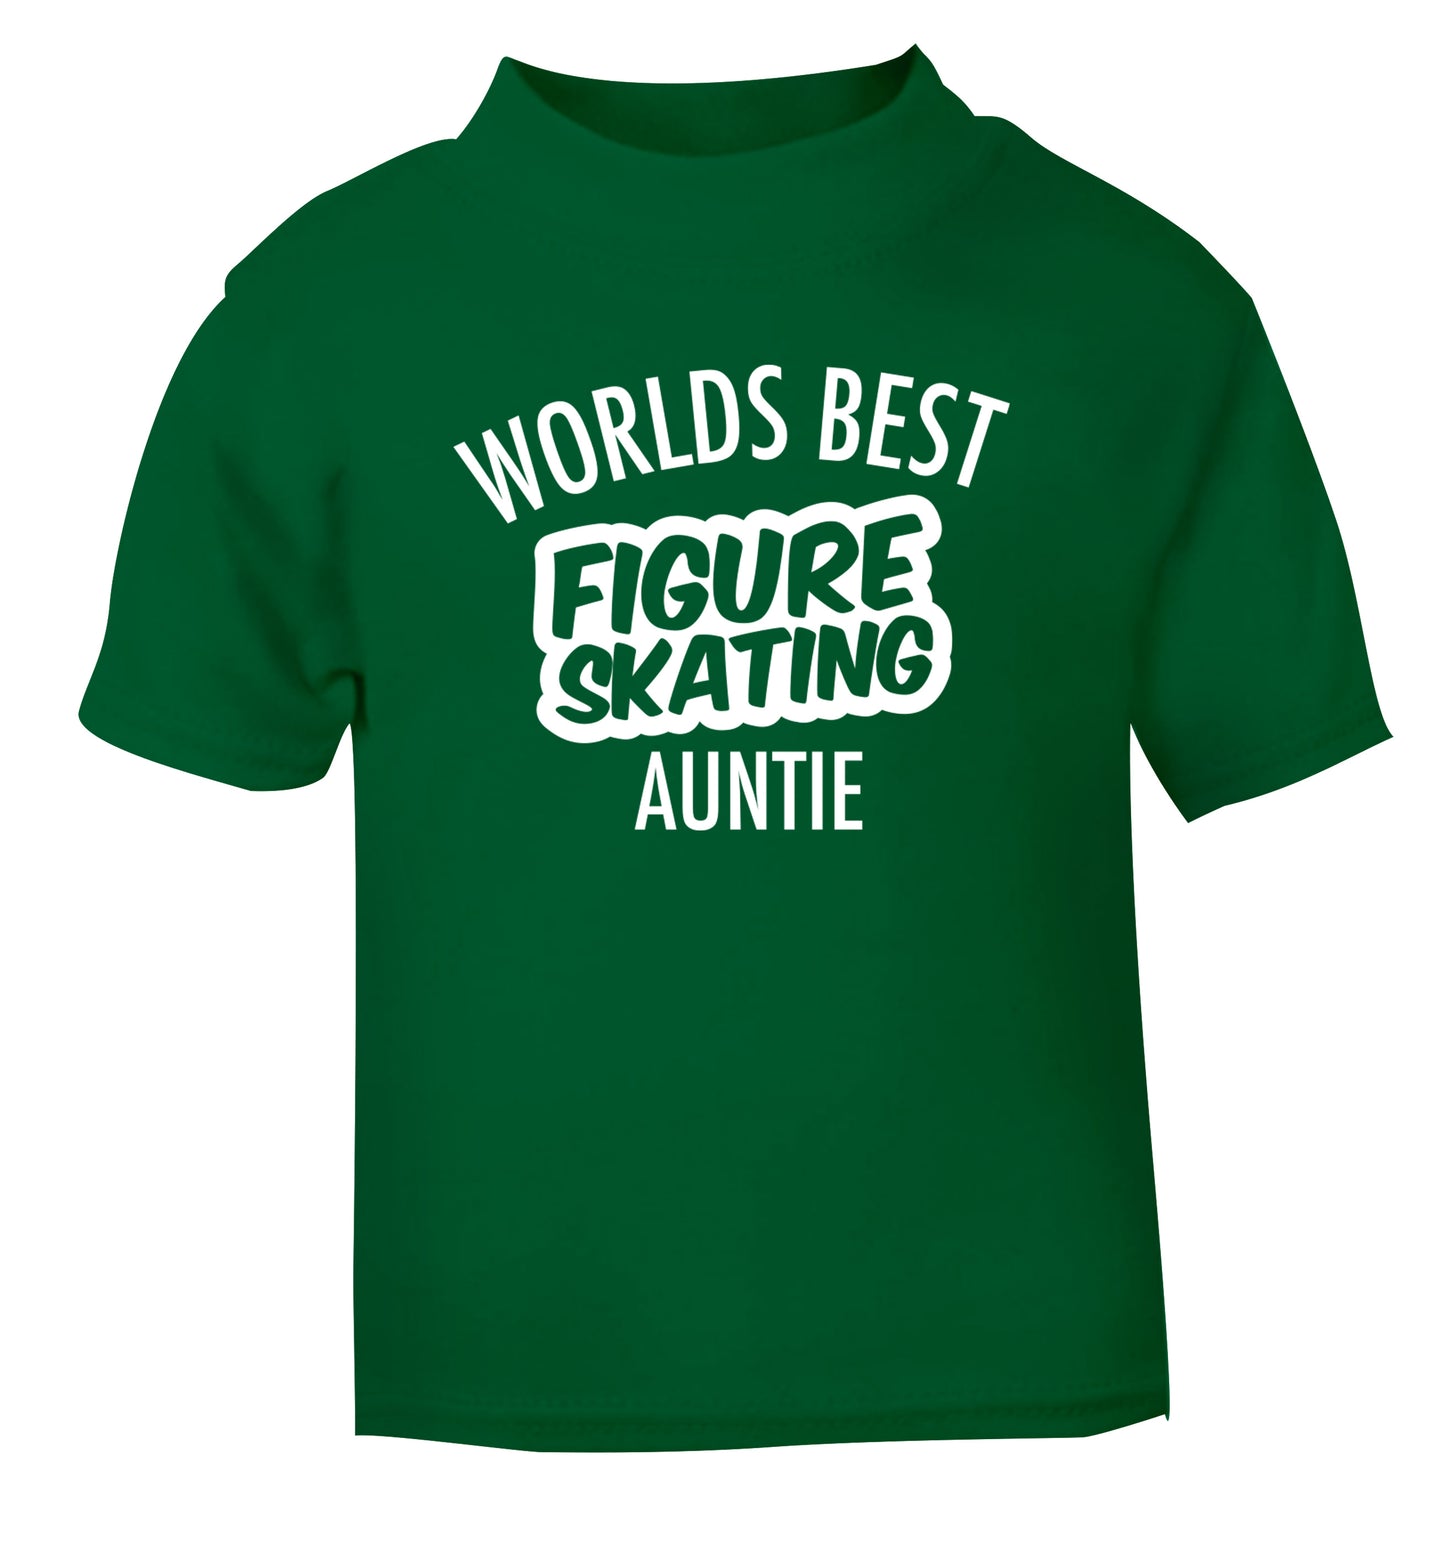 Worlds best figure skating auntie green Baby Toddler Tshirt 2 Years